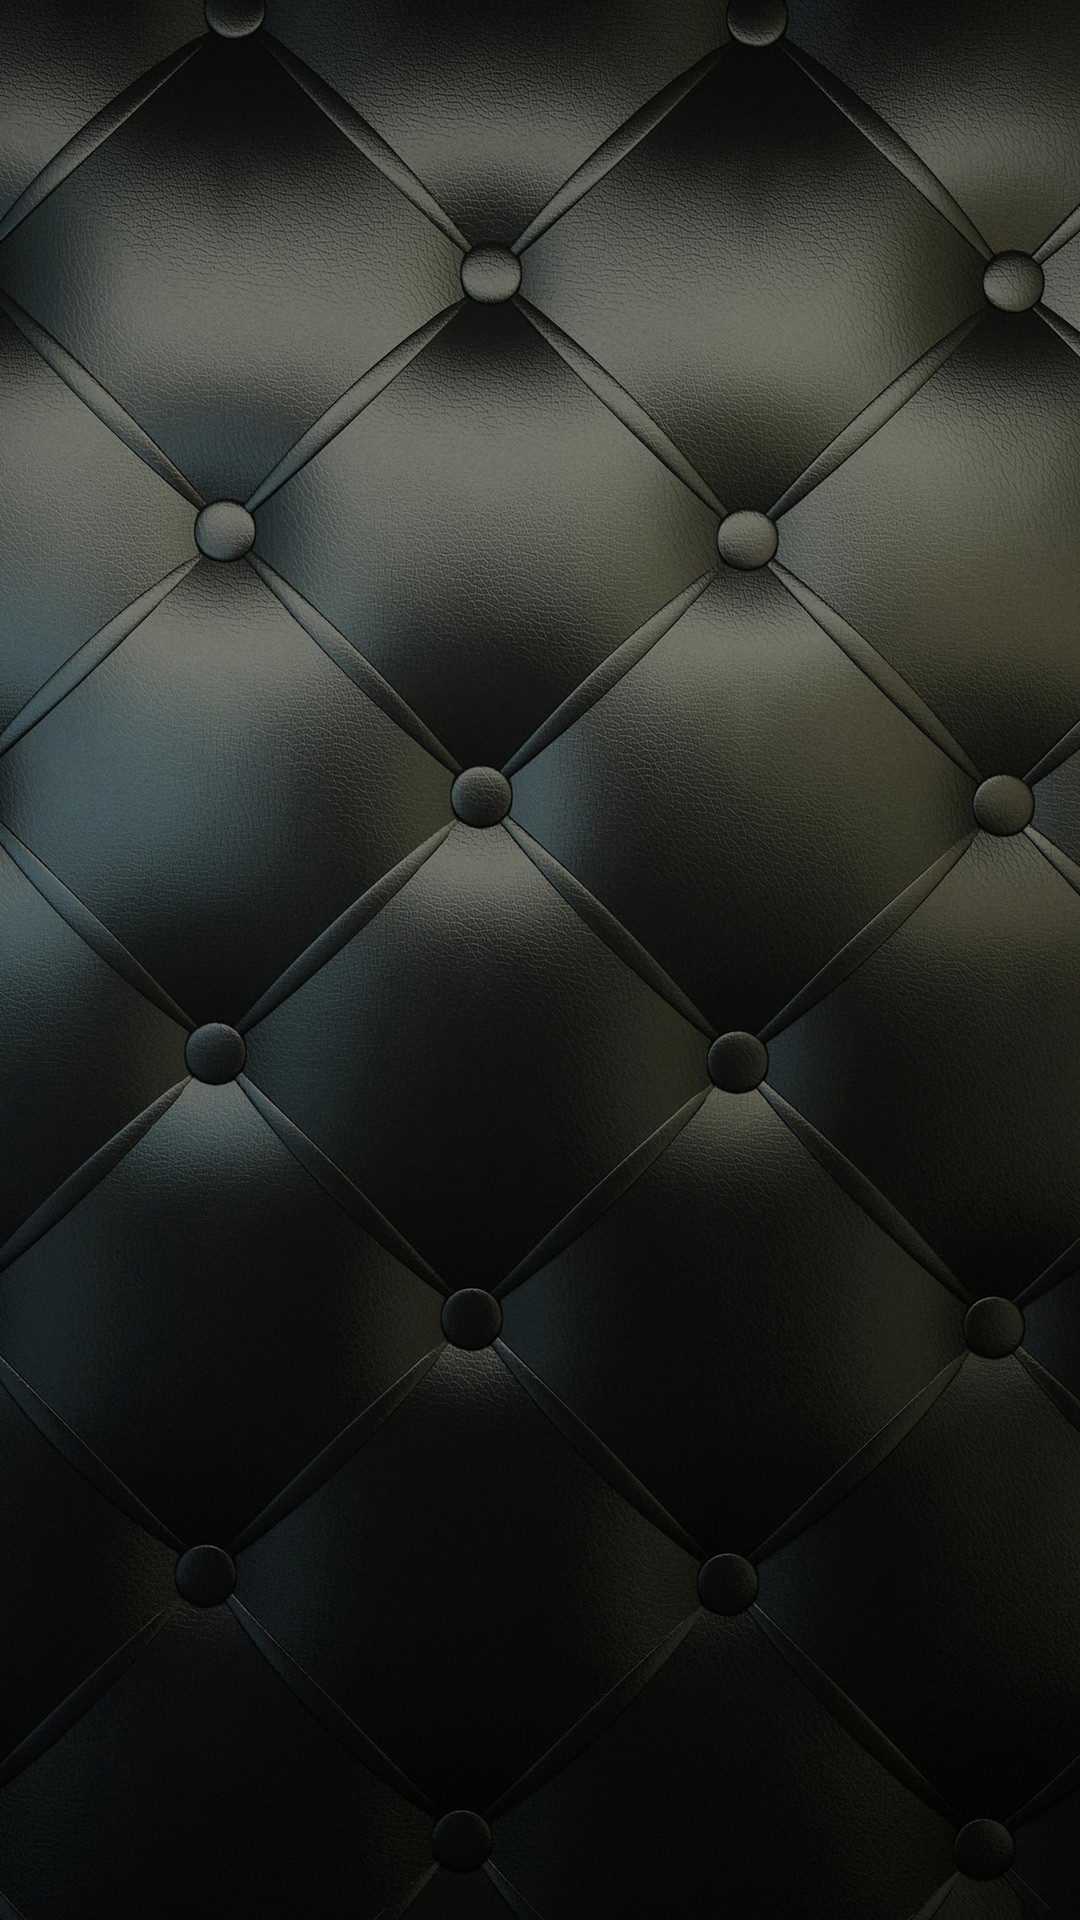 1080x1920 Dark Chesterfield Sofa Pattern iPhone 6 Plus HD Wallpaper